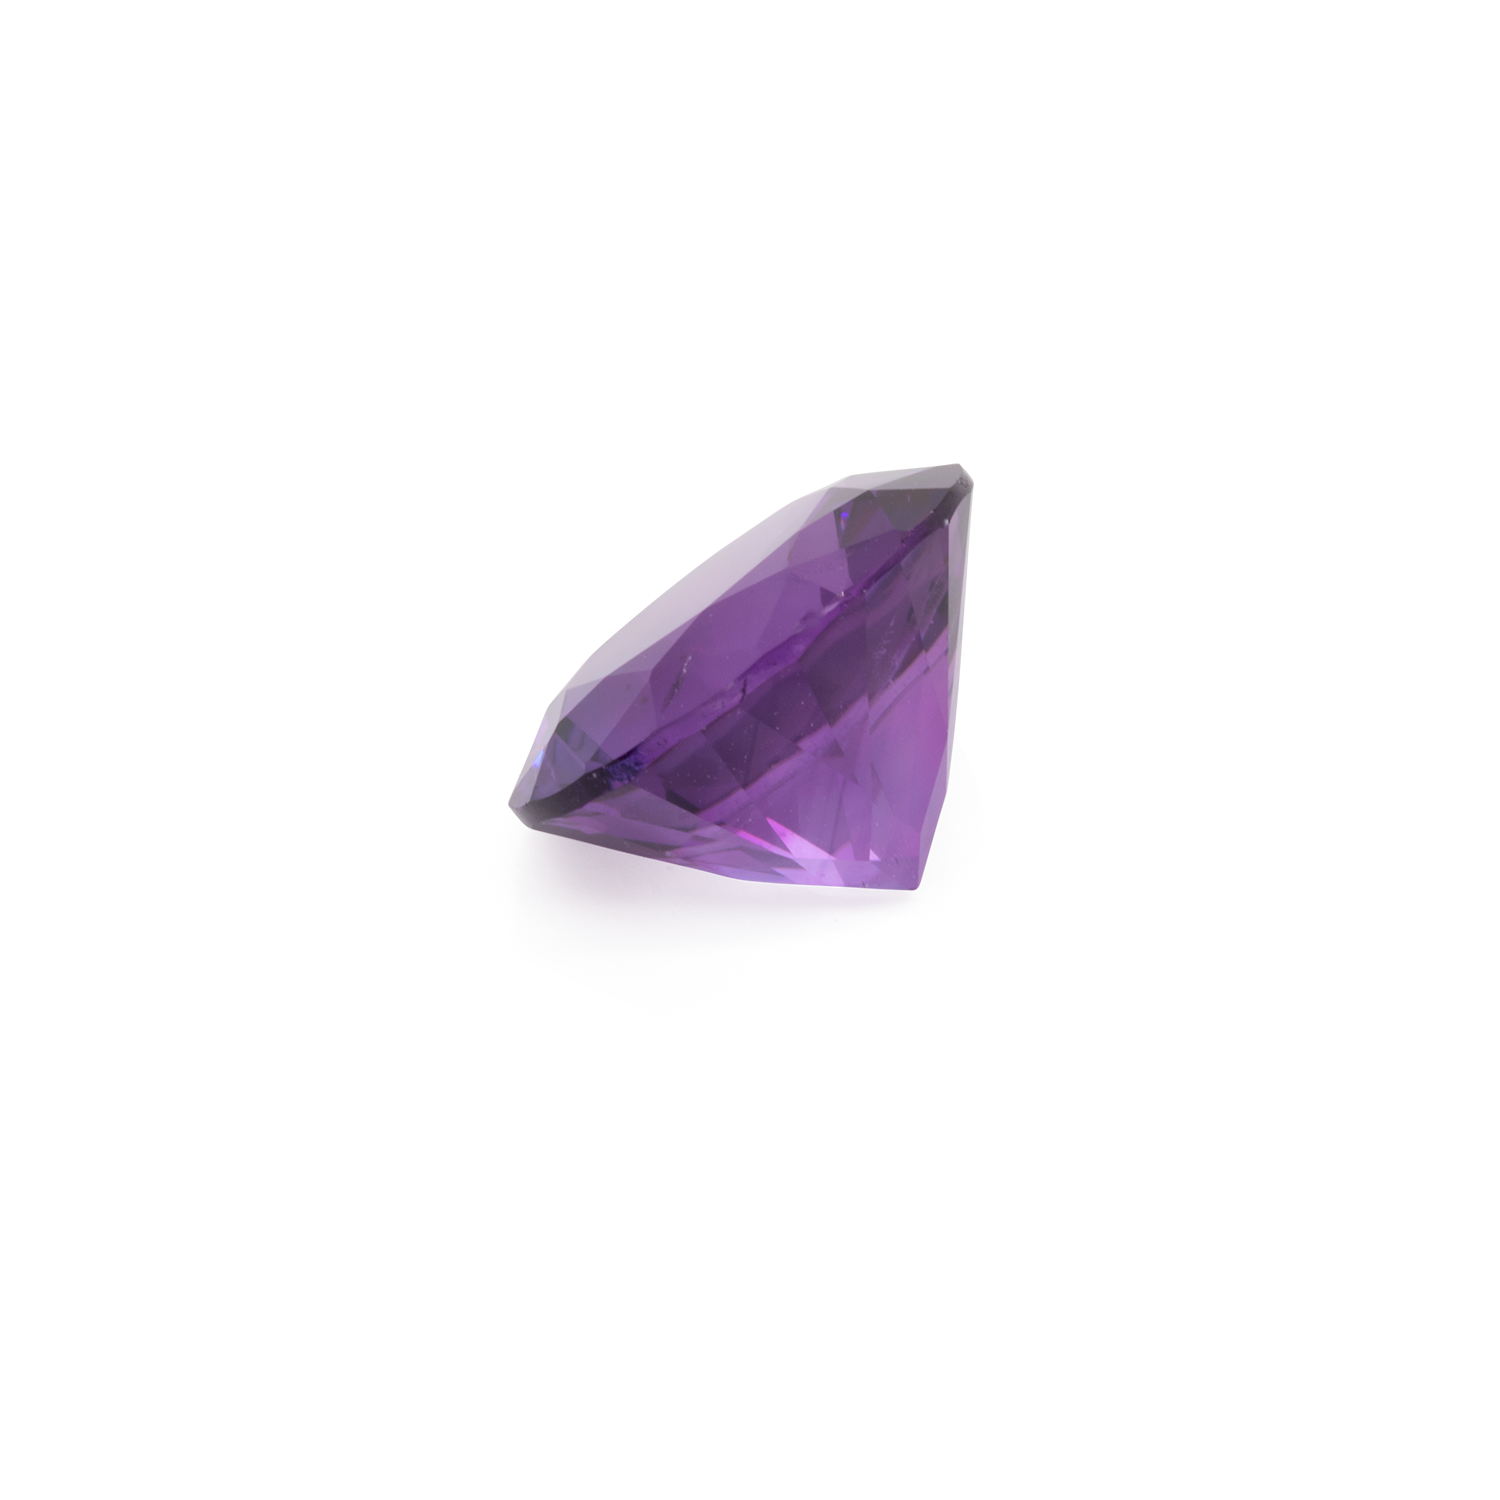 Amethyst - purple, round, 13x13 mm, 6.91 cts, No. AMY31001